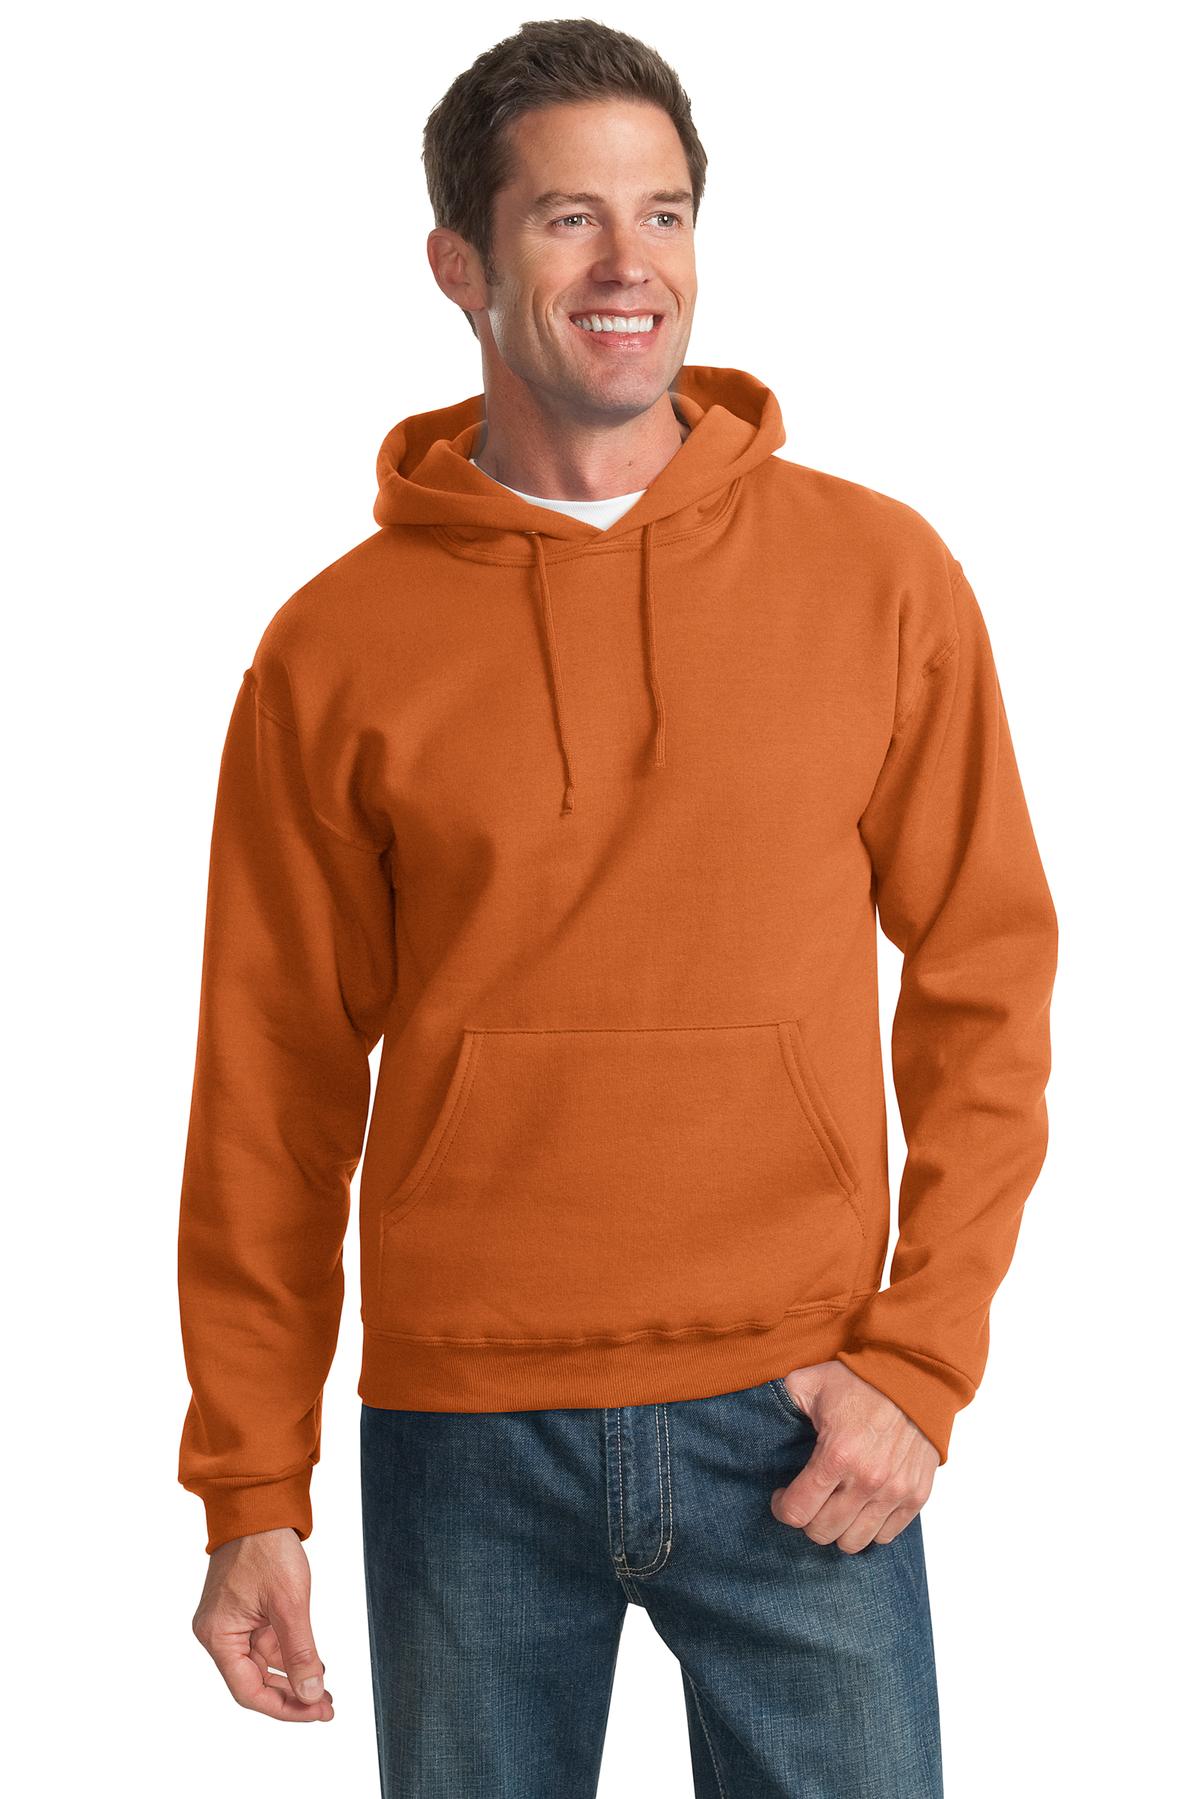 JERZEES® - NuBlend® Pullover Hooded Sweatshirt. 996M [Texas Orange] - DFW Impression